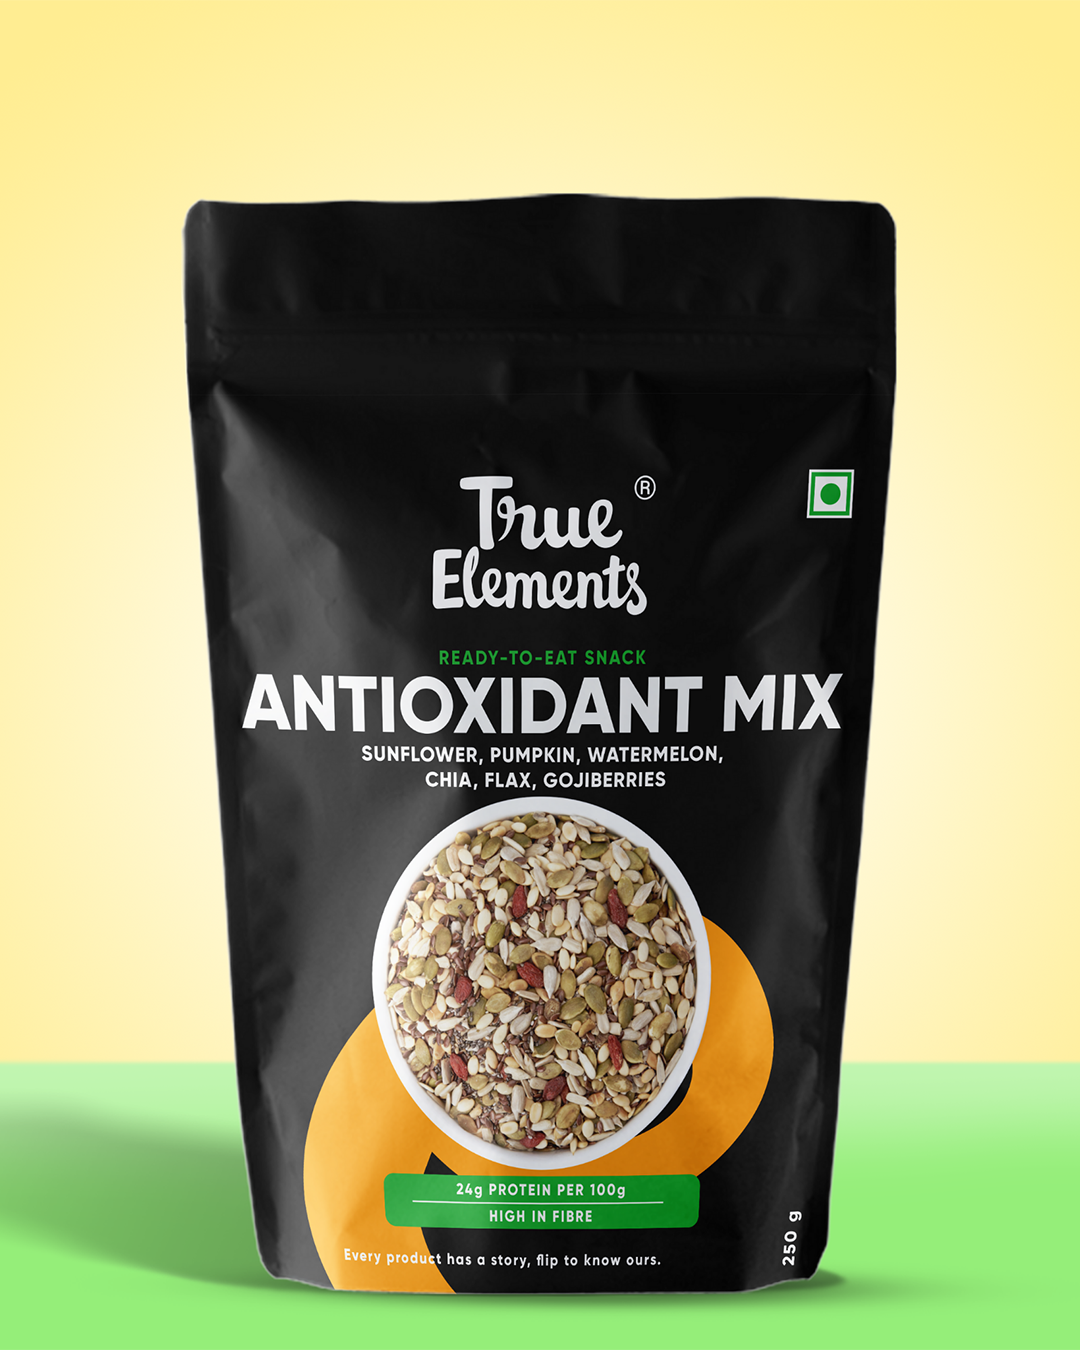 Antioxidant mix with sunflower, pumpkin, watermelon, chia, flax, gojiberries in 250g pouch.